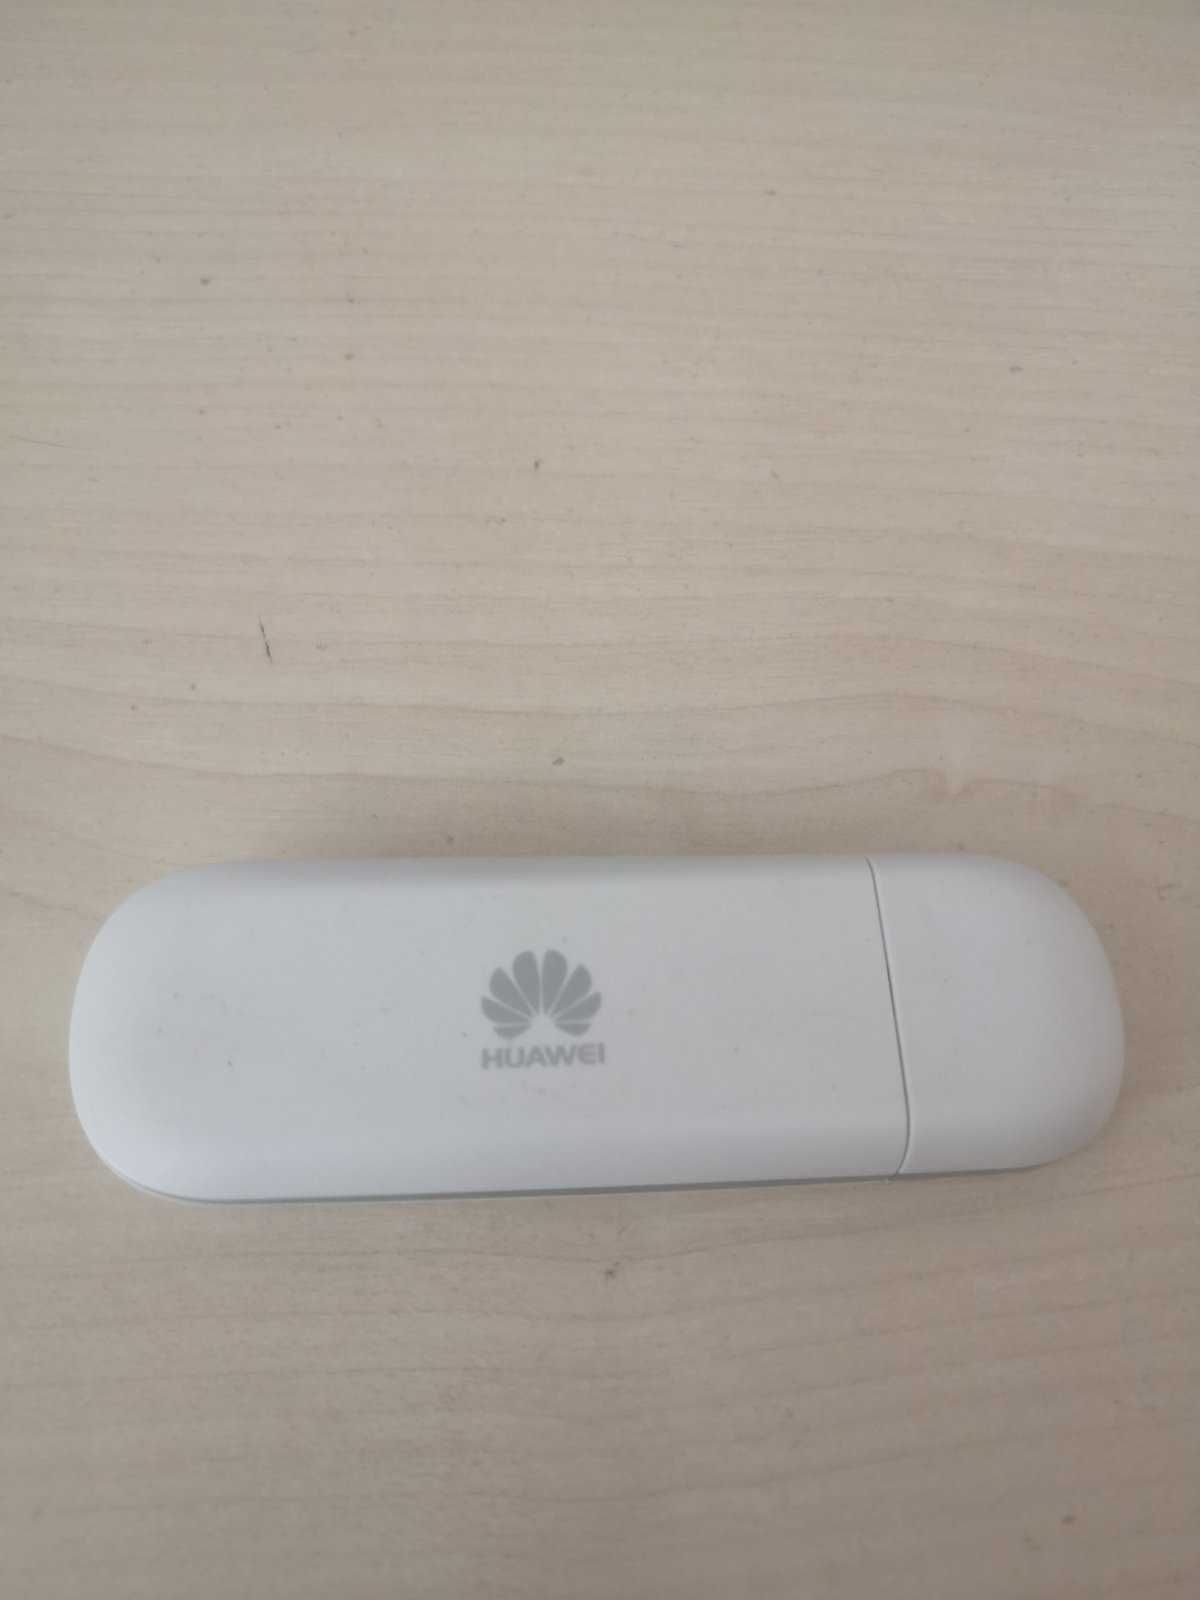 3G USB модем/роутер HUAWEI E303 (E303h-1)